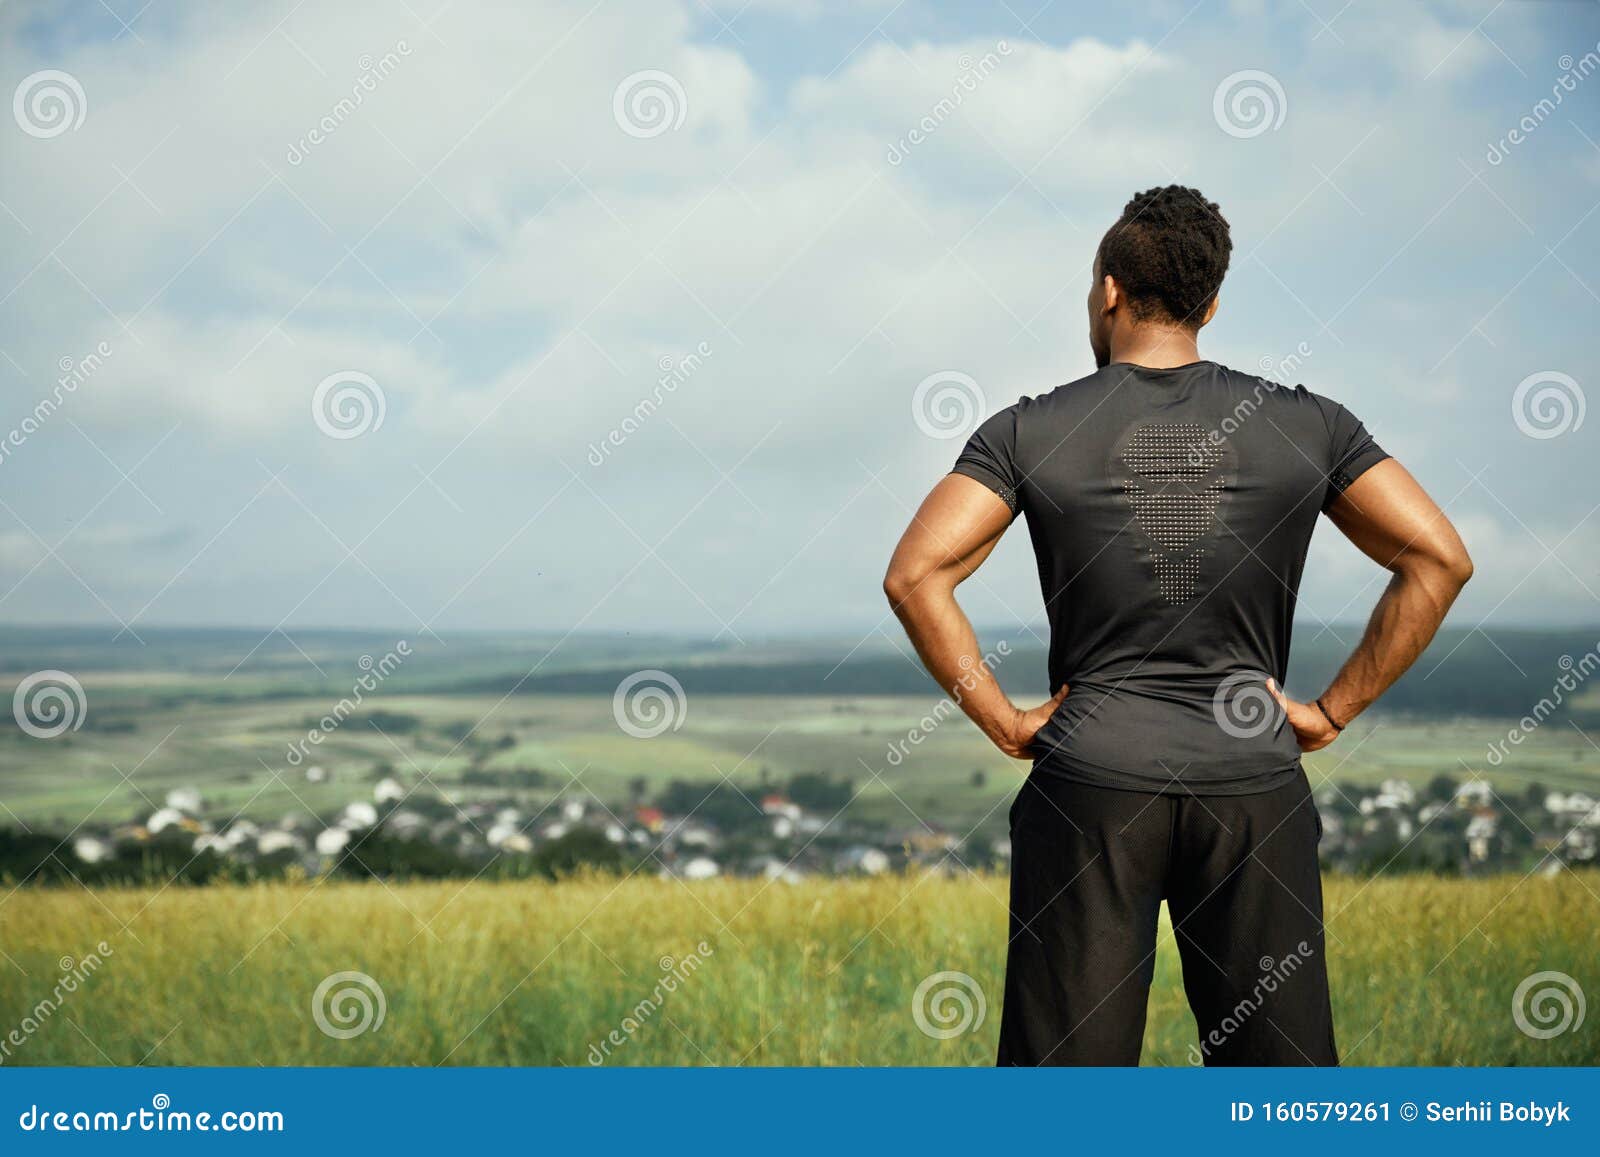 Muscular African Man in Sportswear Posing Outdoors. Stock Image - Image ...